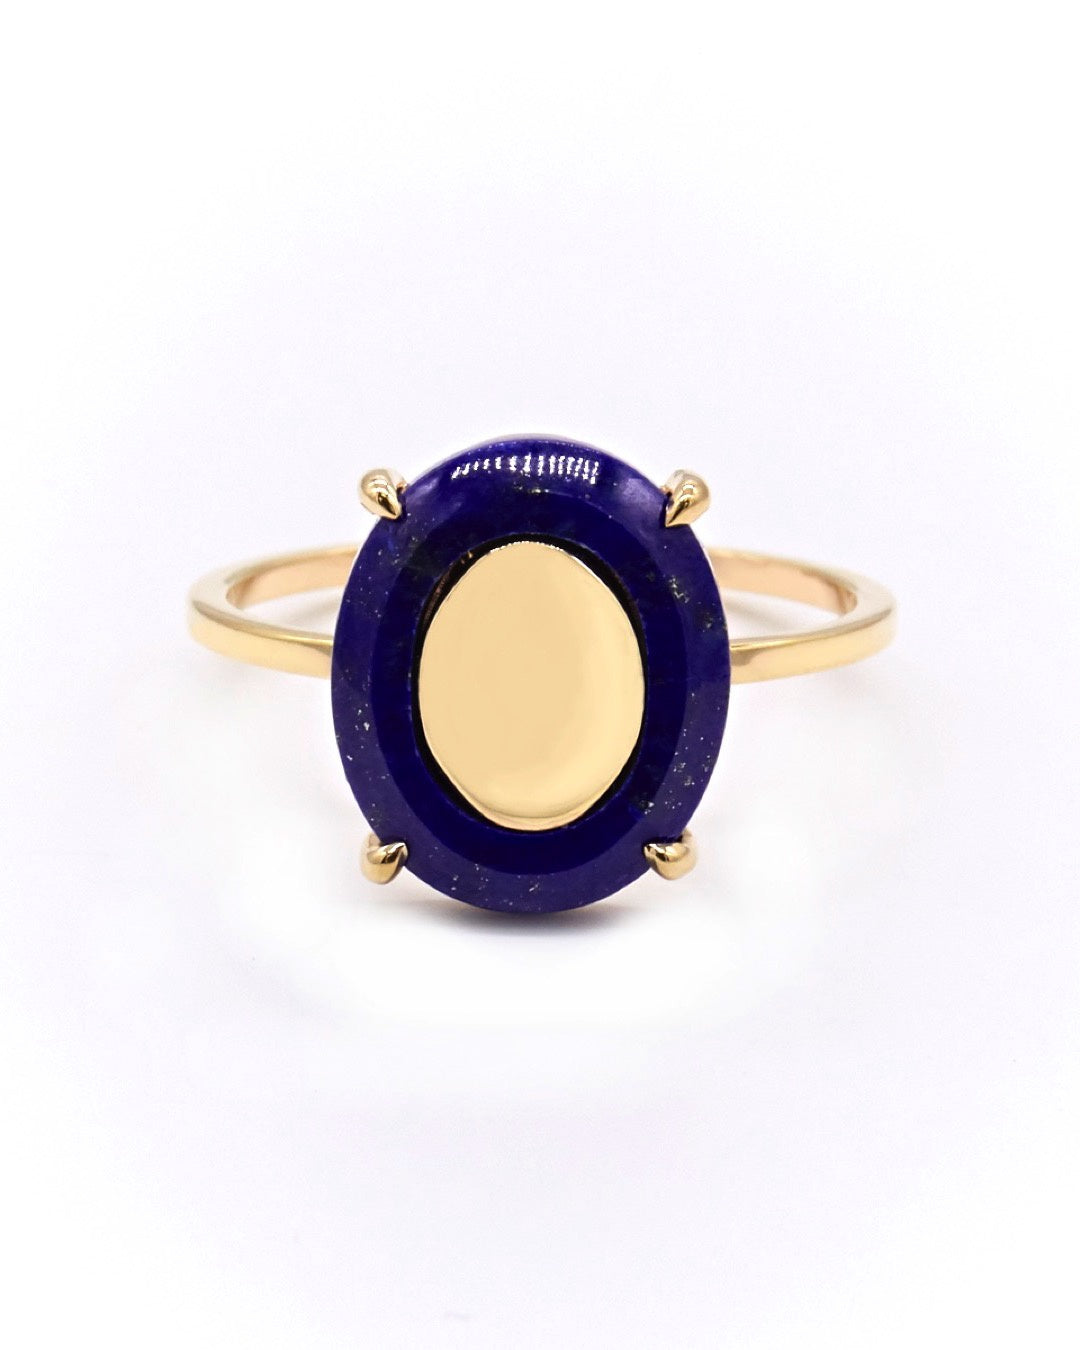 Suma Ring with Lapis Lazuli - Prae Store